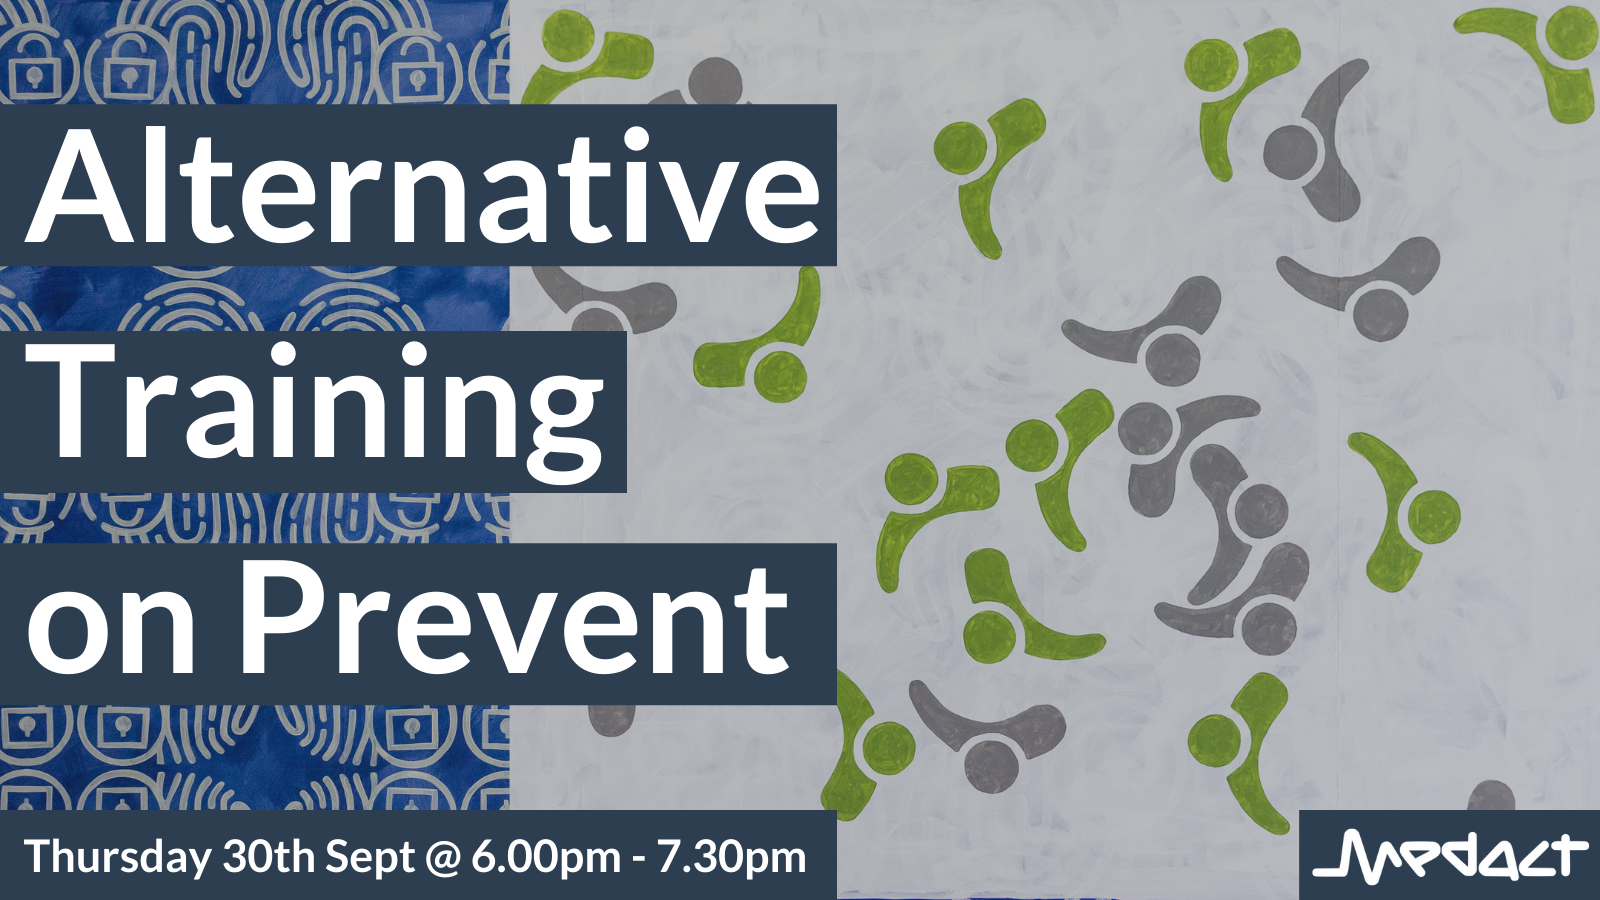 Alternative Training on Prevent in Healthcare #3